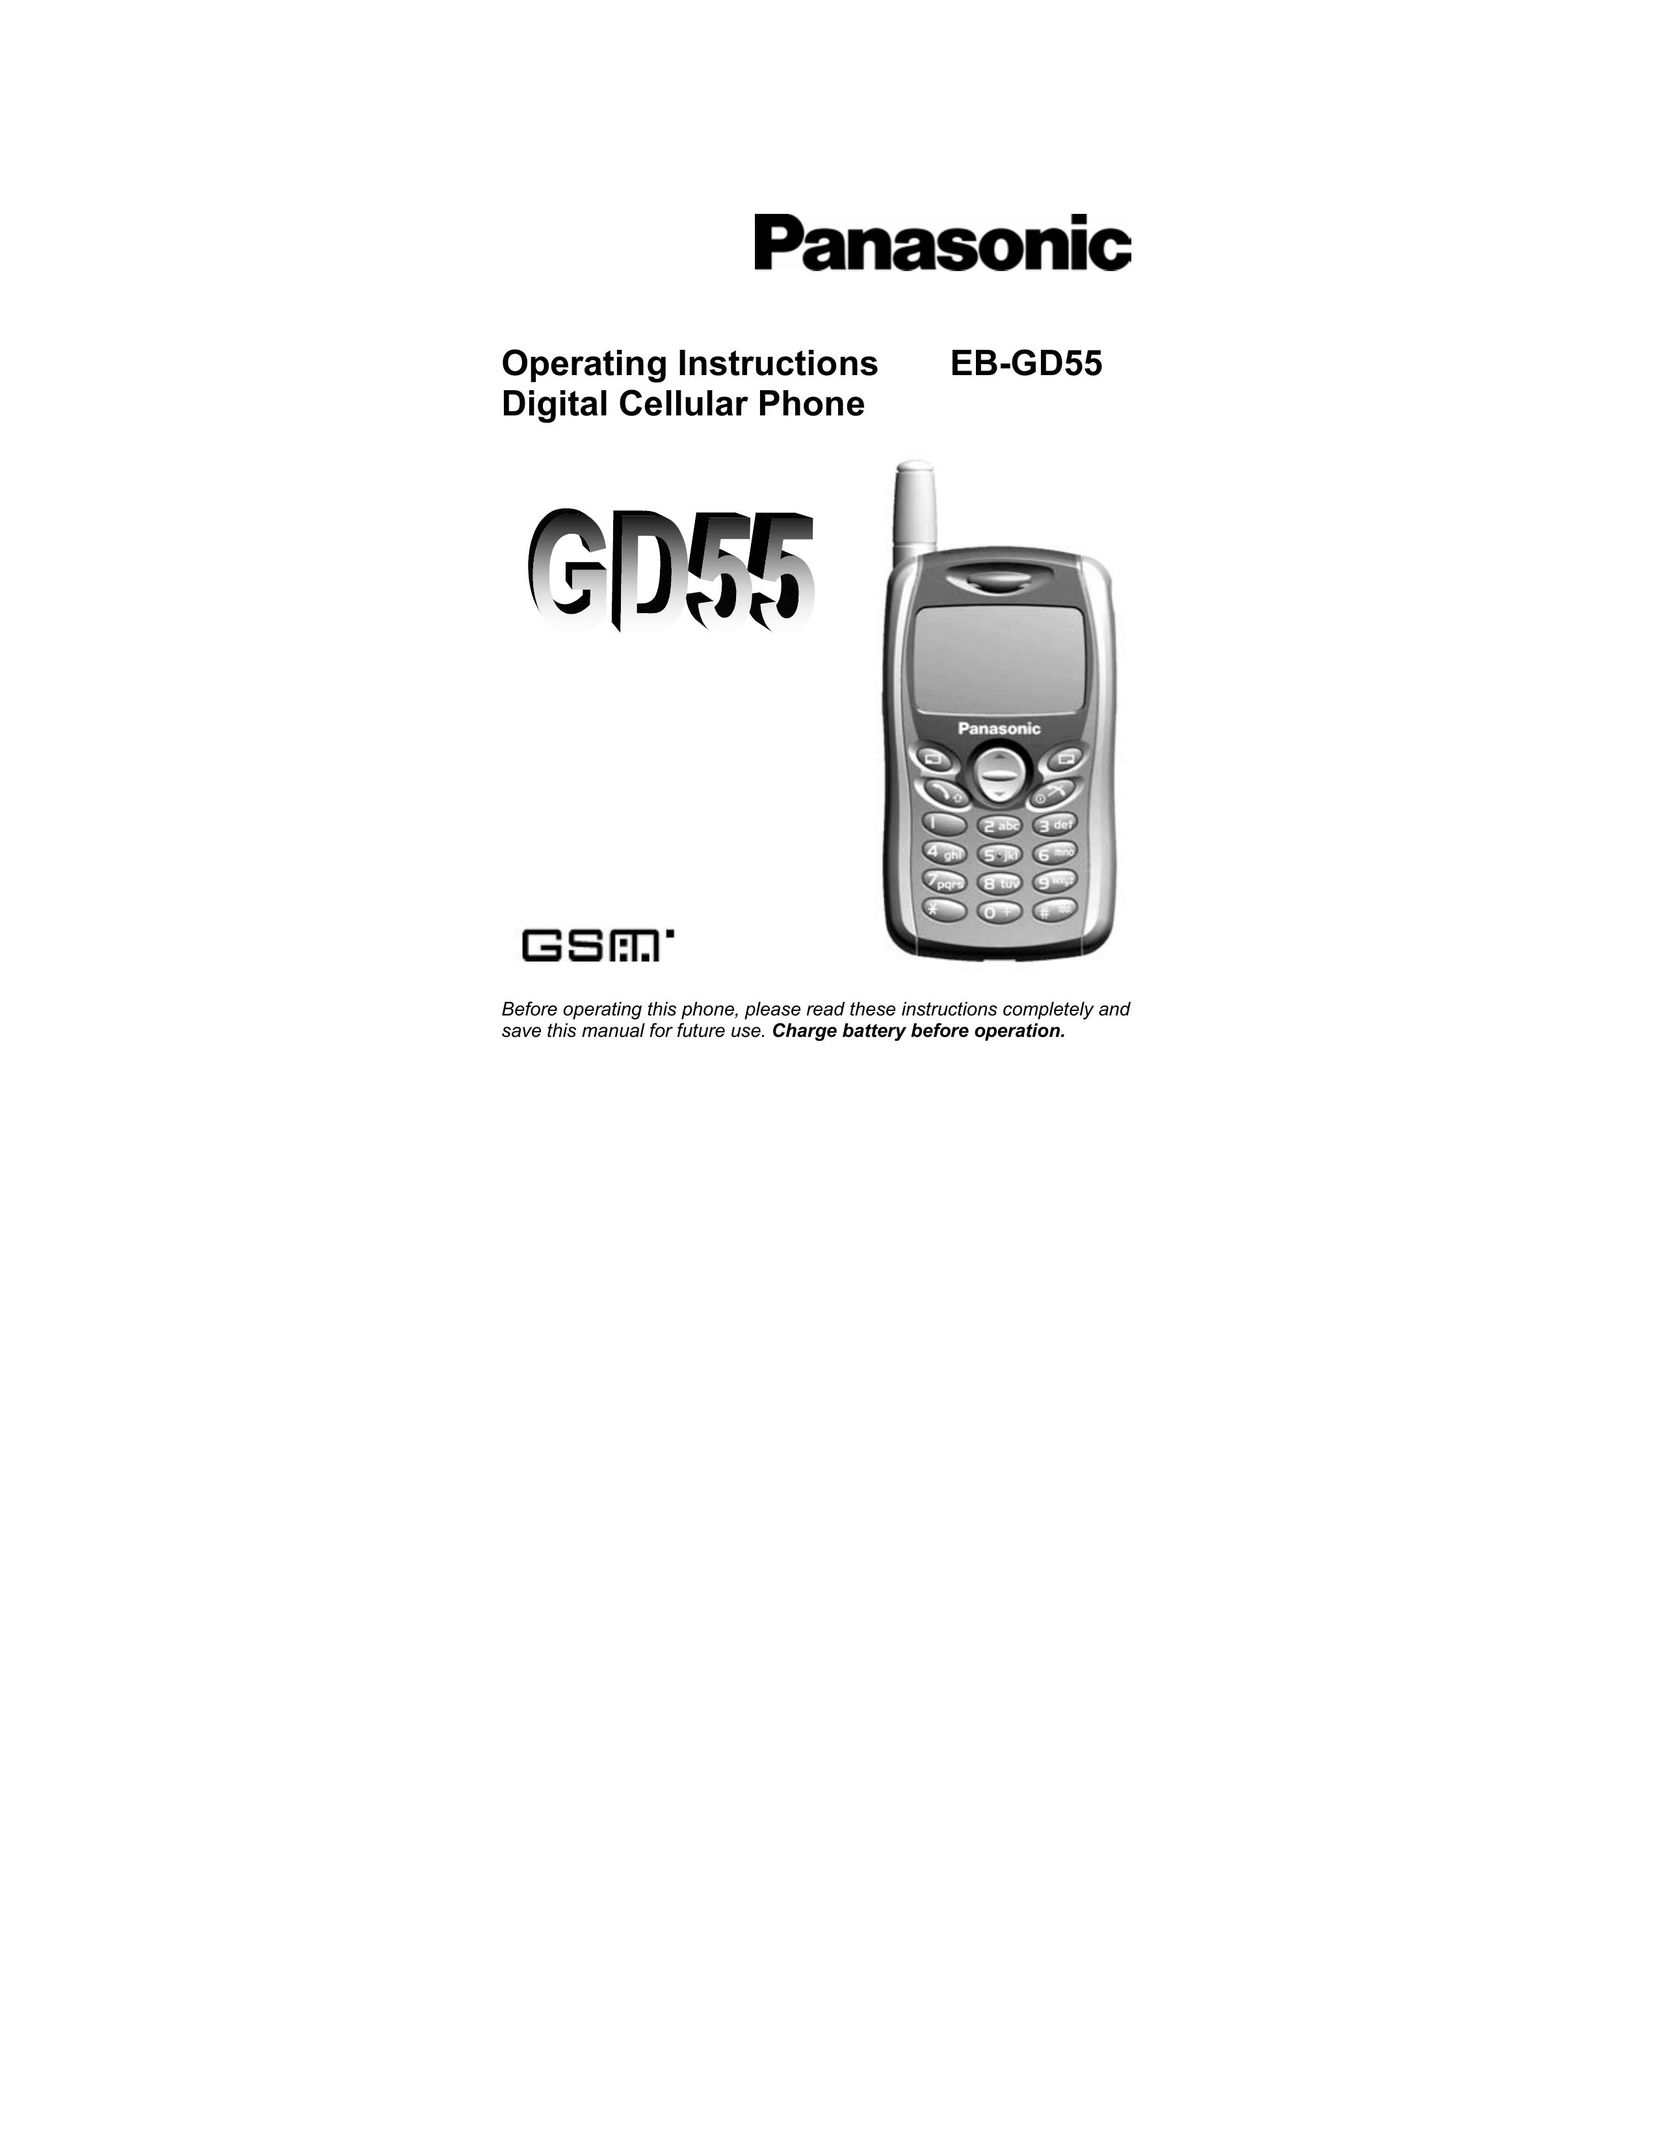 Panasonic EB-GD55 Cell Phone User Manual